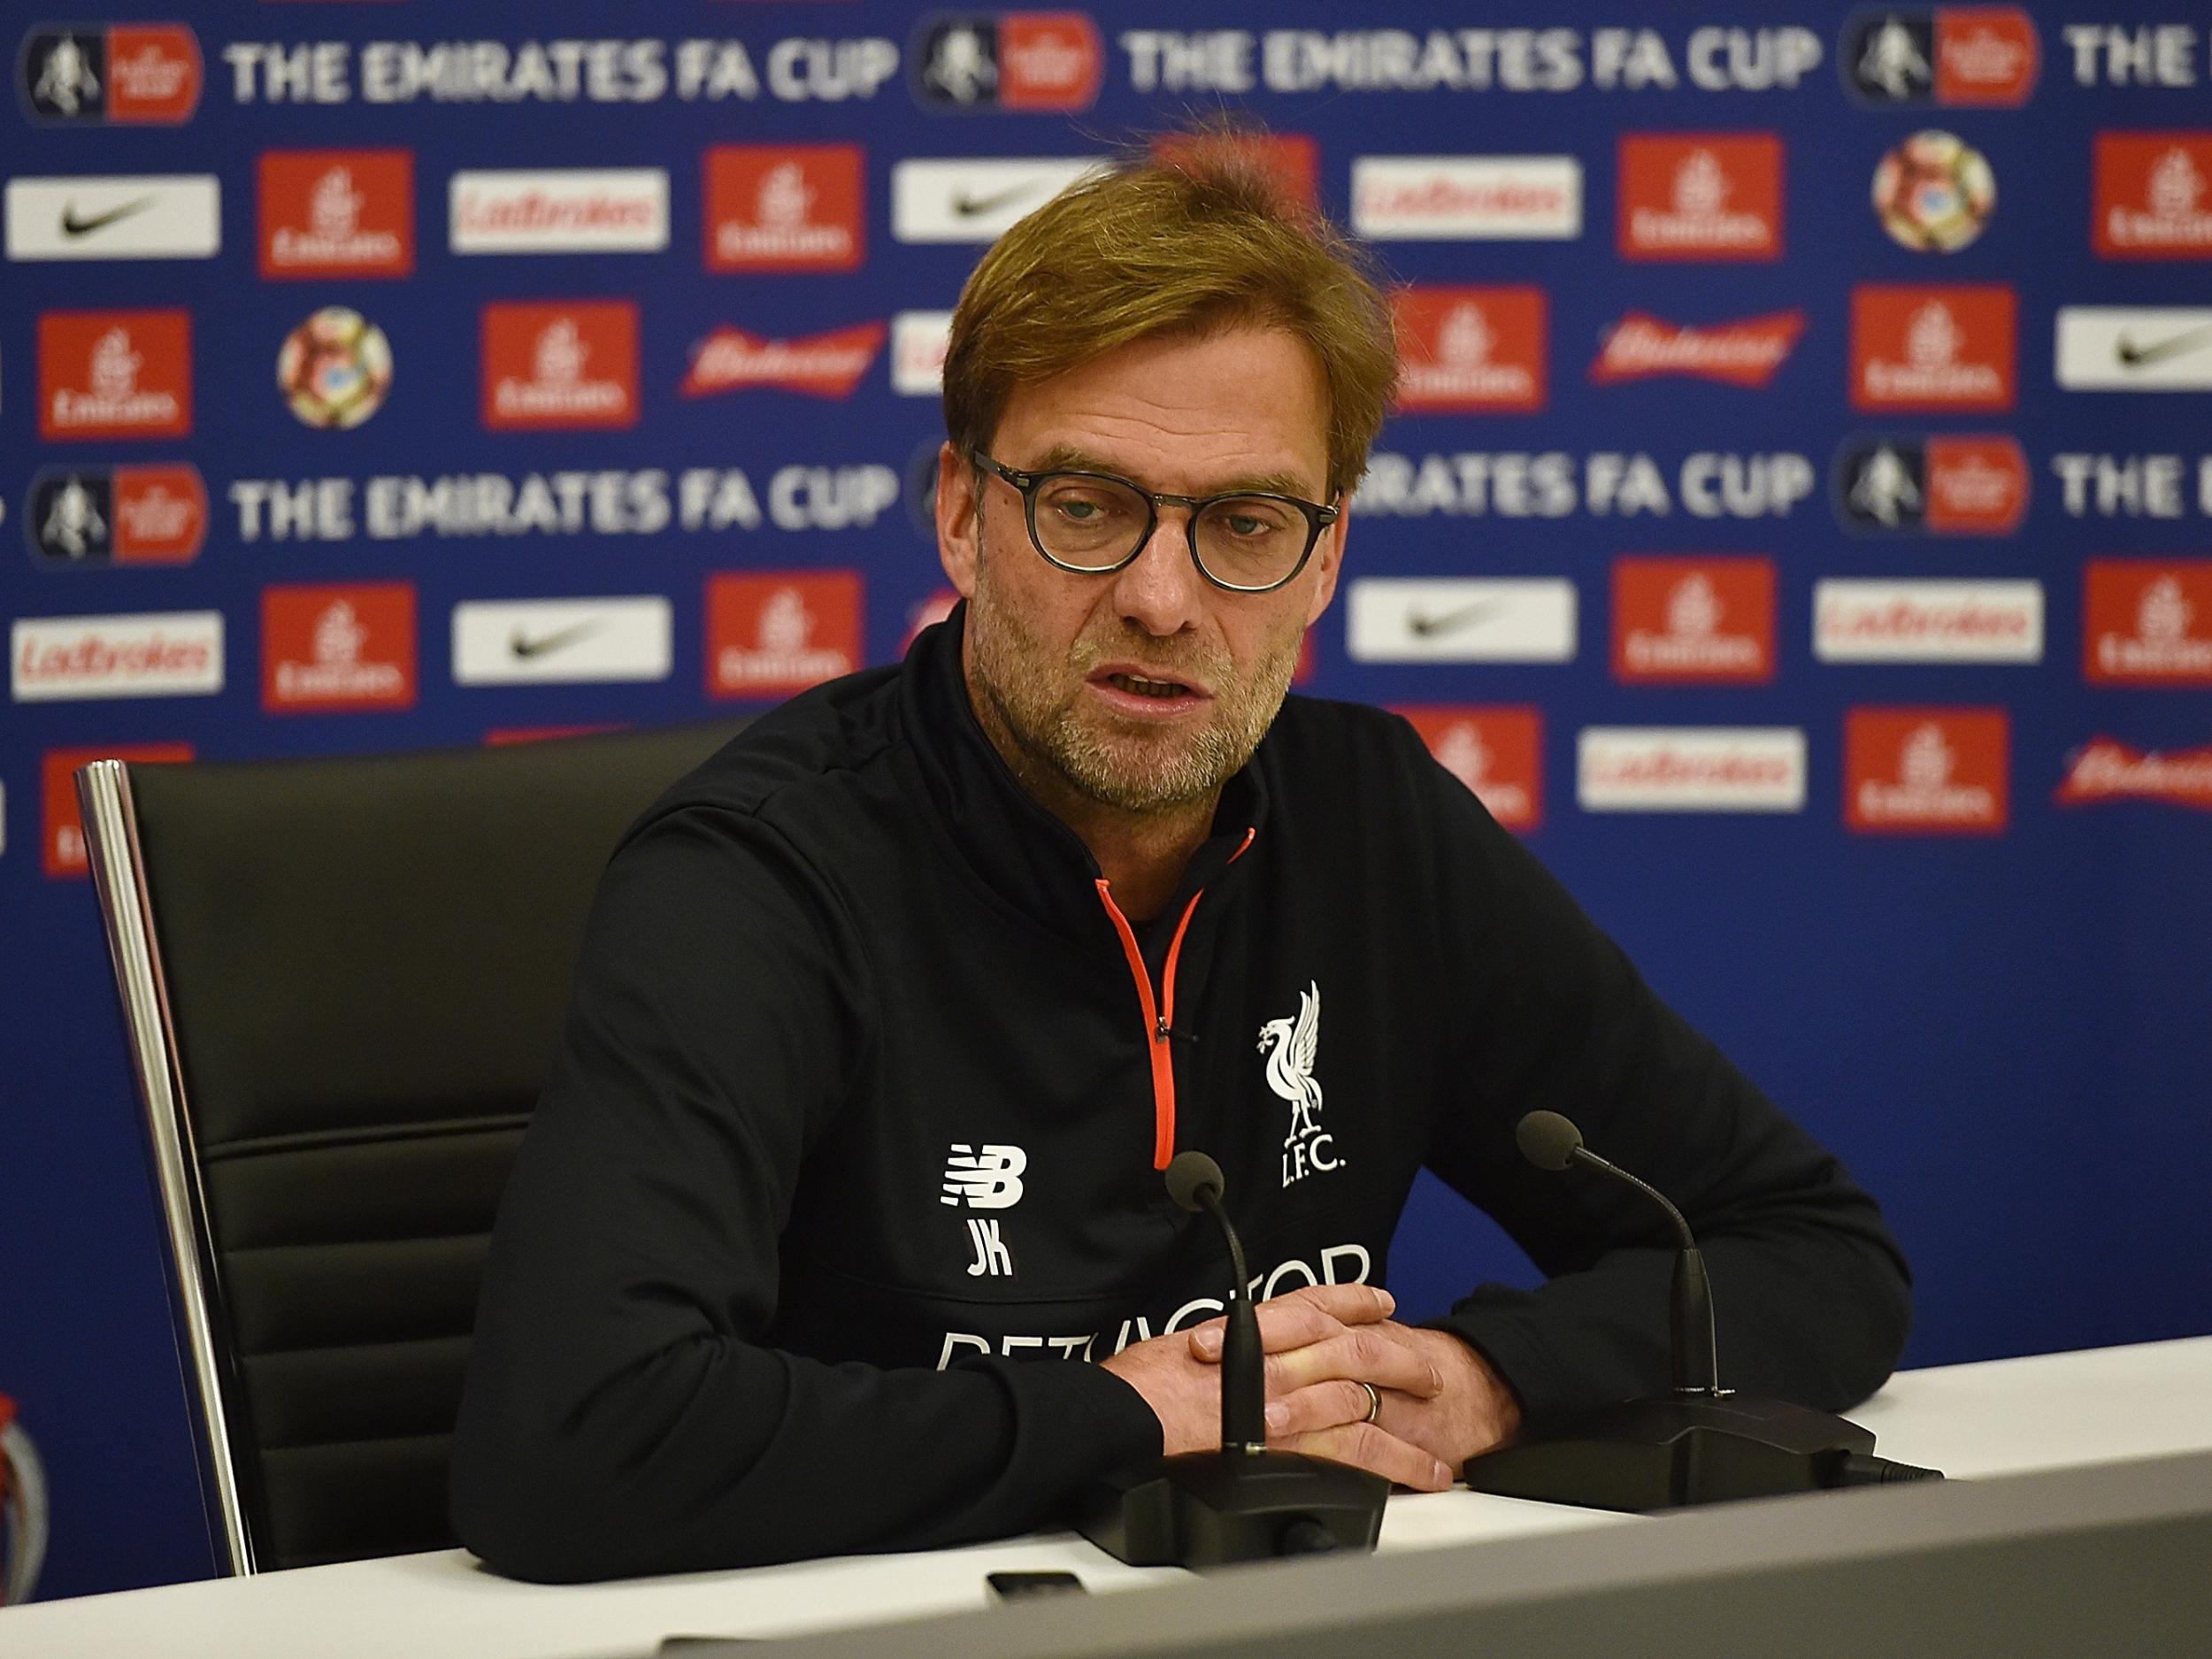 Jurgen Klopp is confident he will bring long-term success to Liverpool